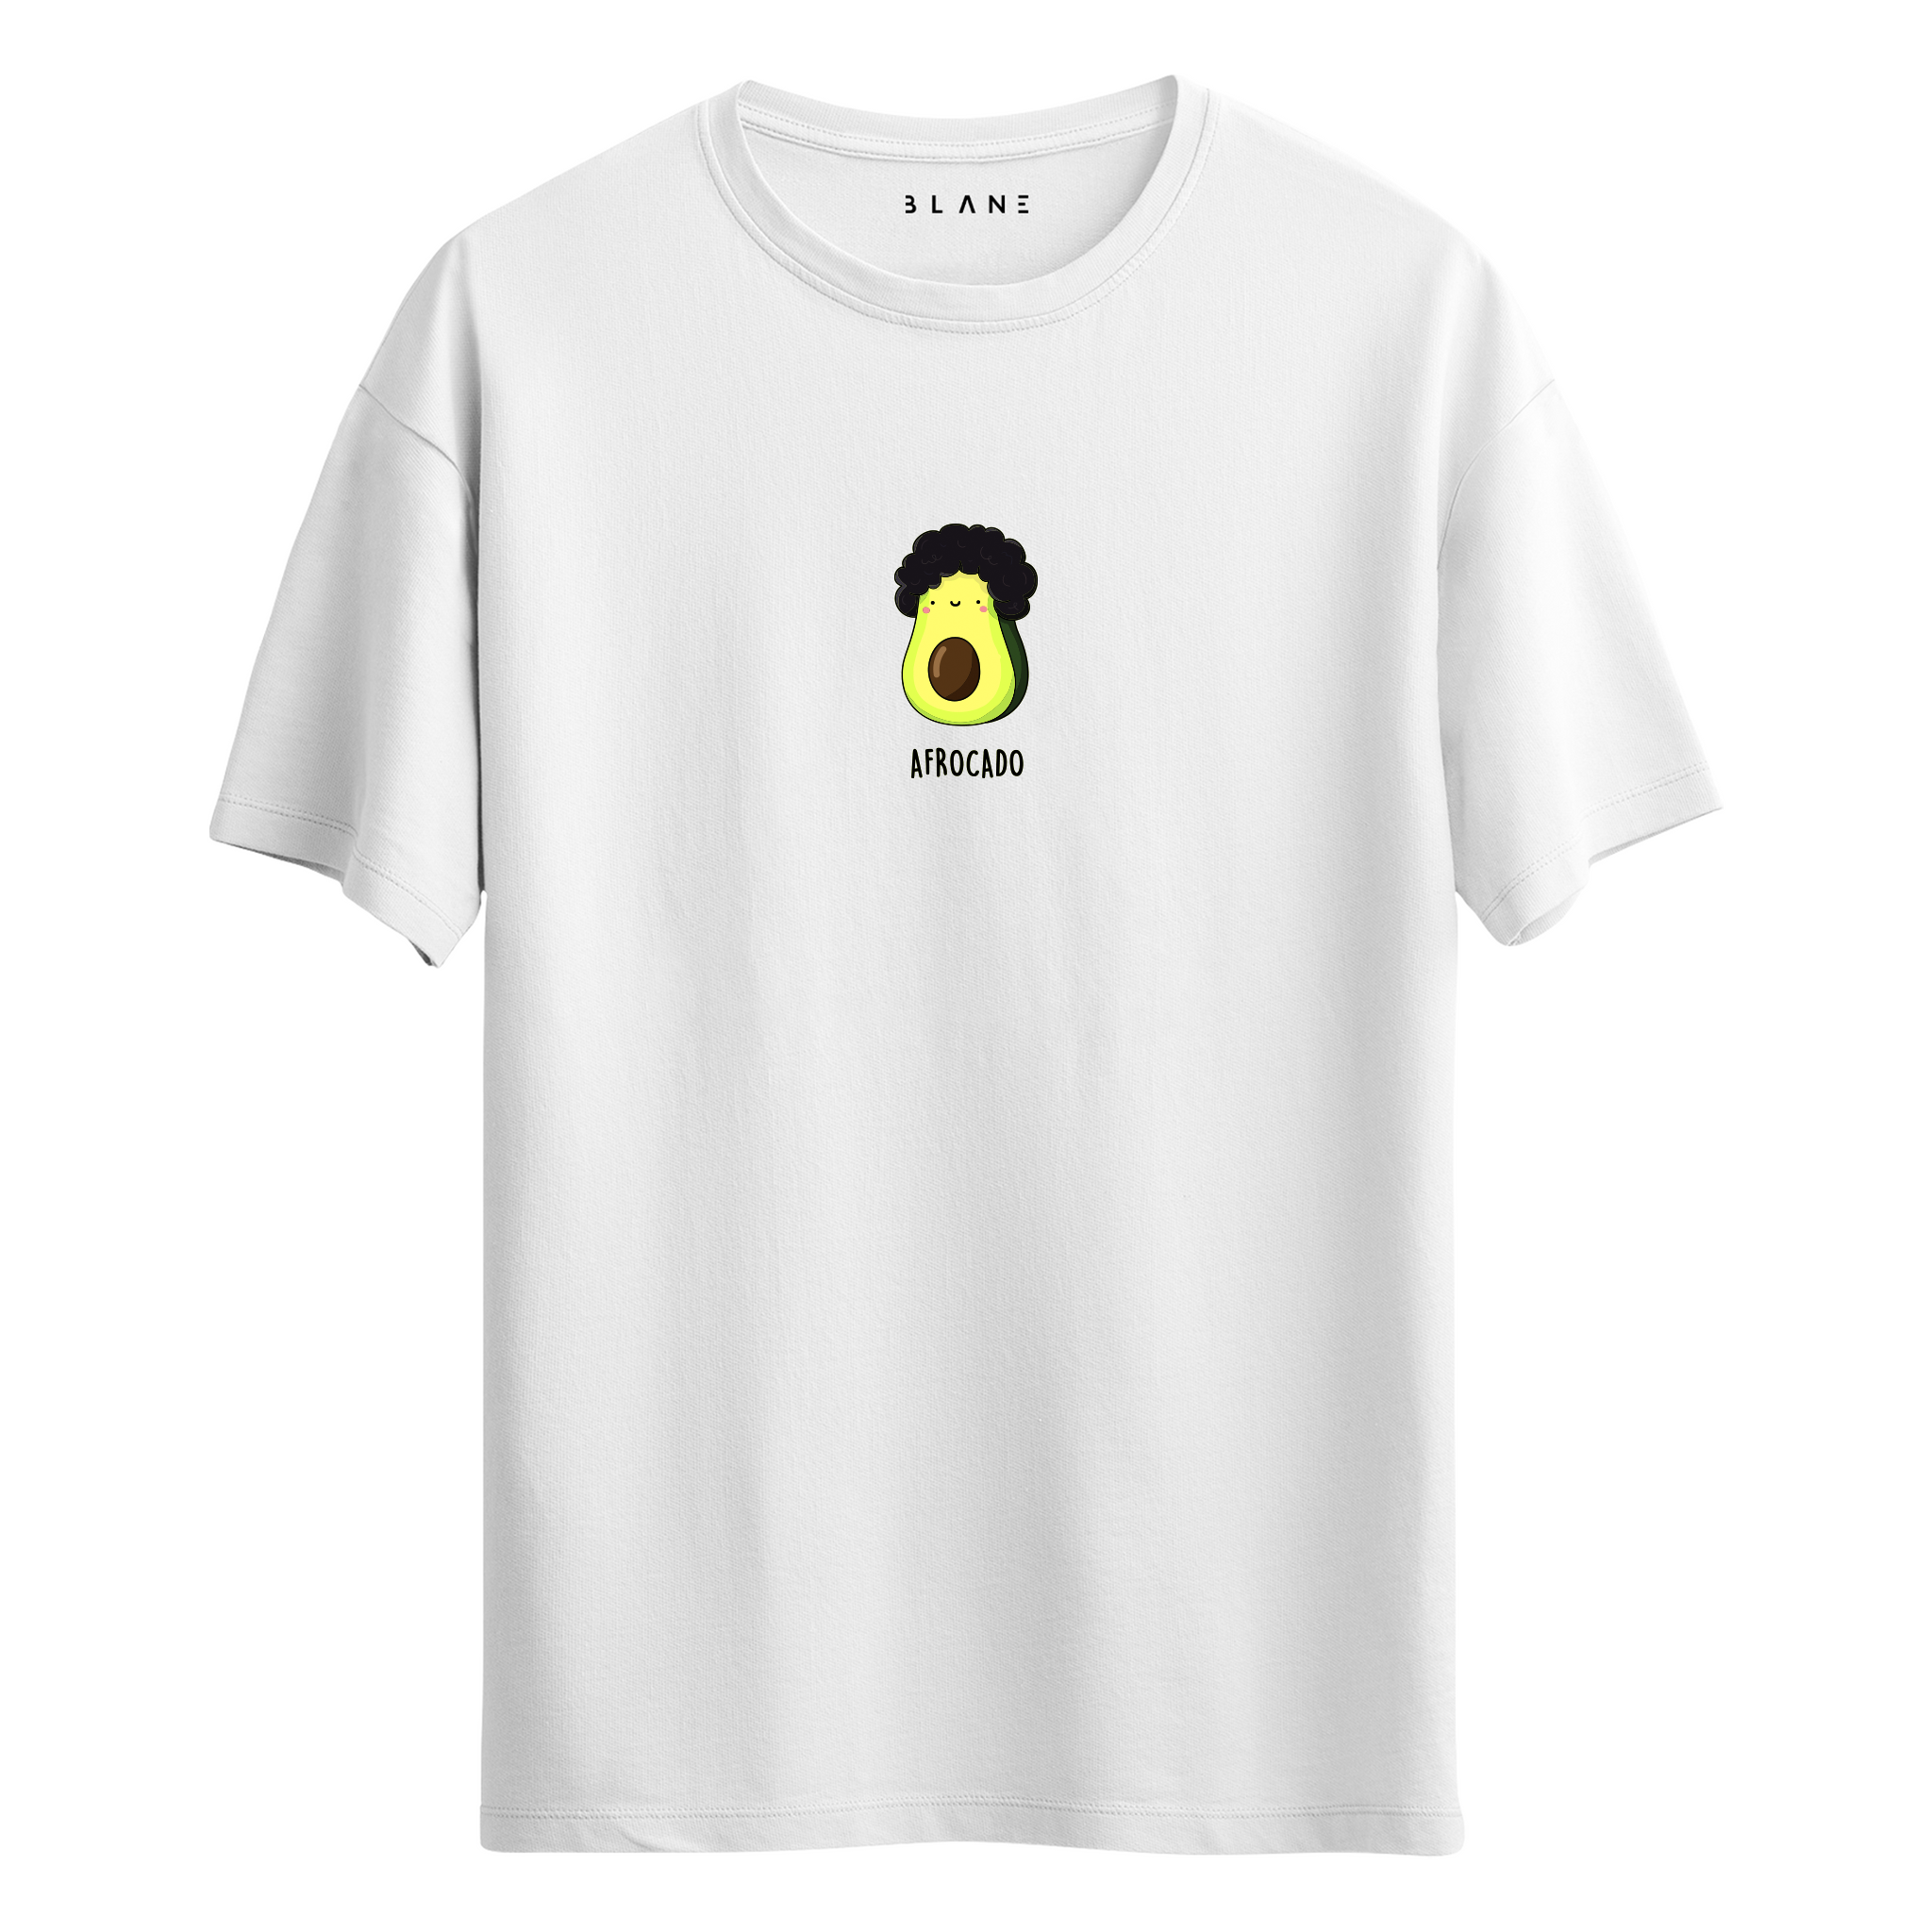 Afrocado - T-Shirt